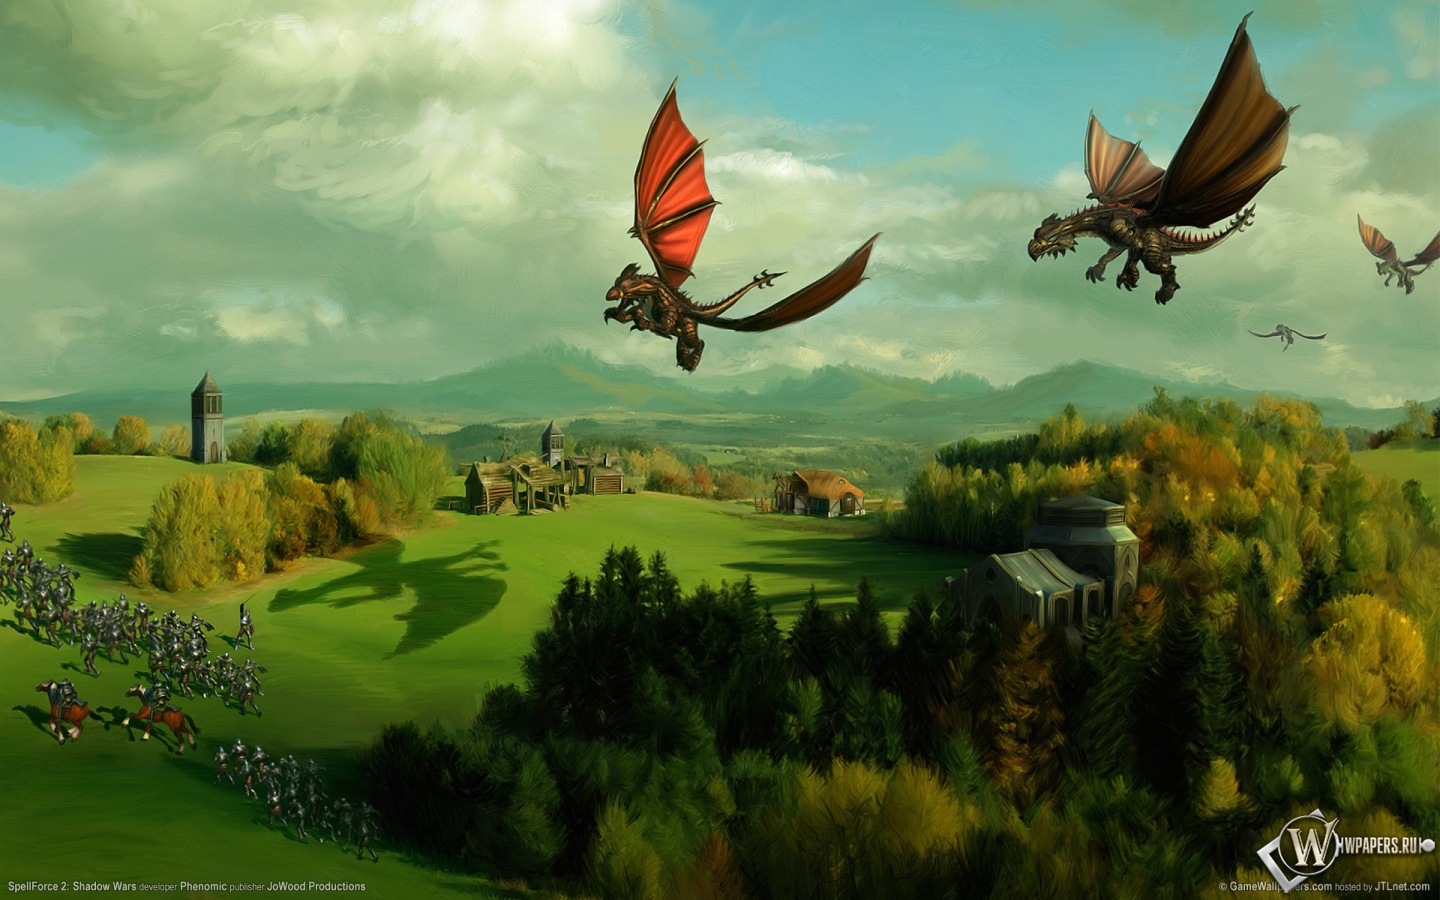 SpellForce 2 Dragons 1440x900